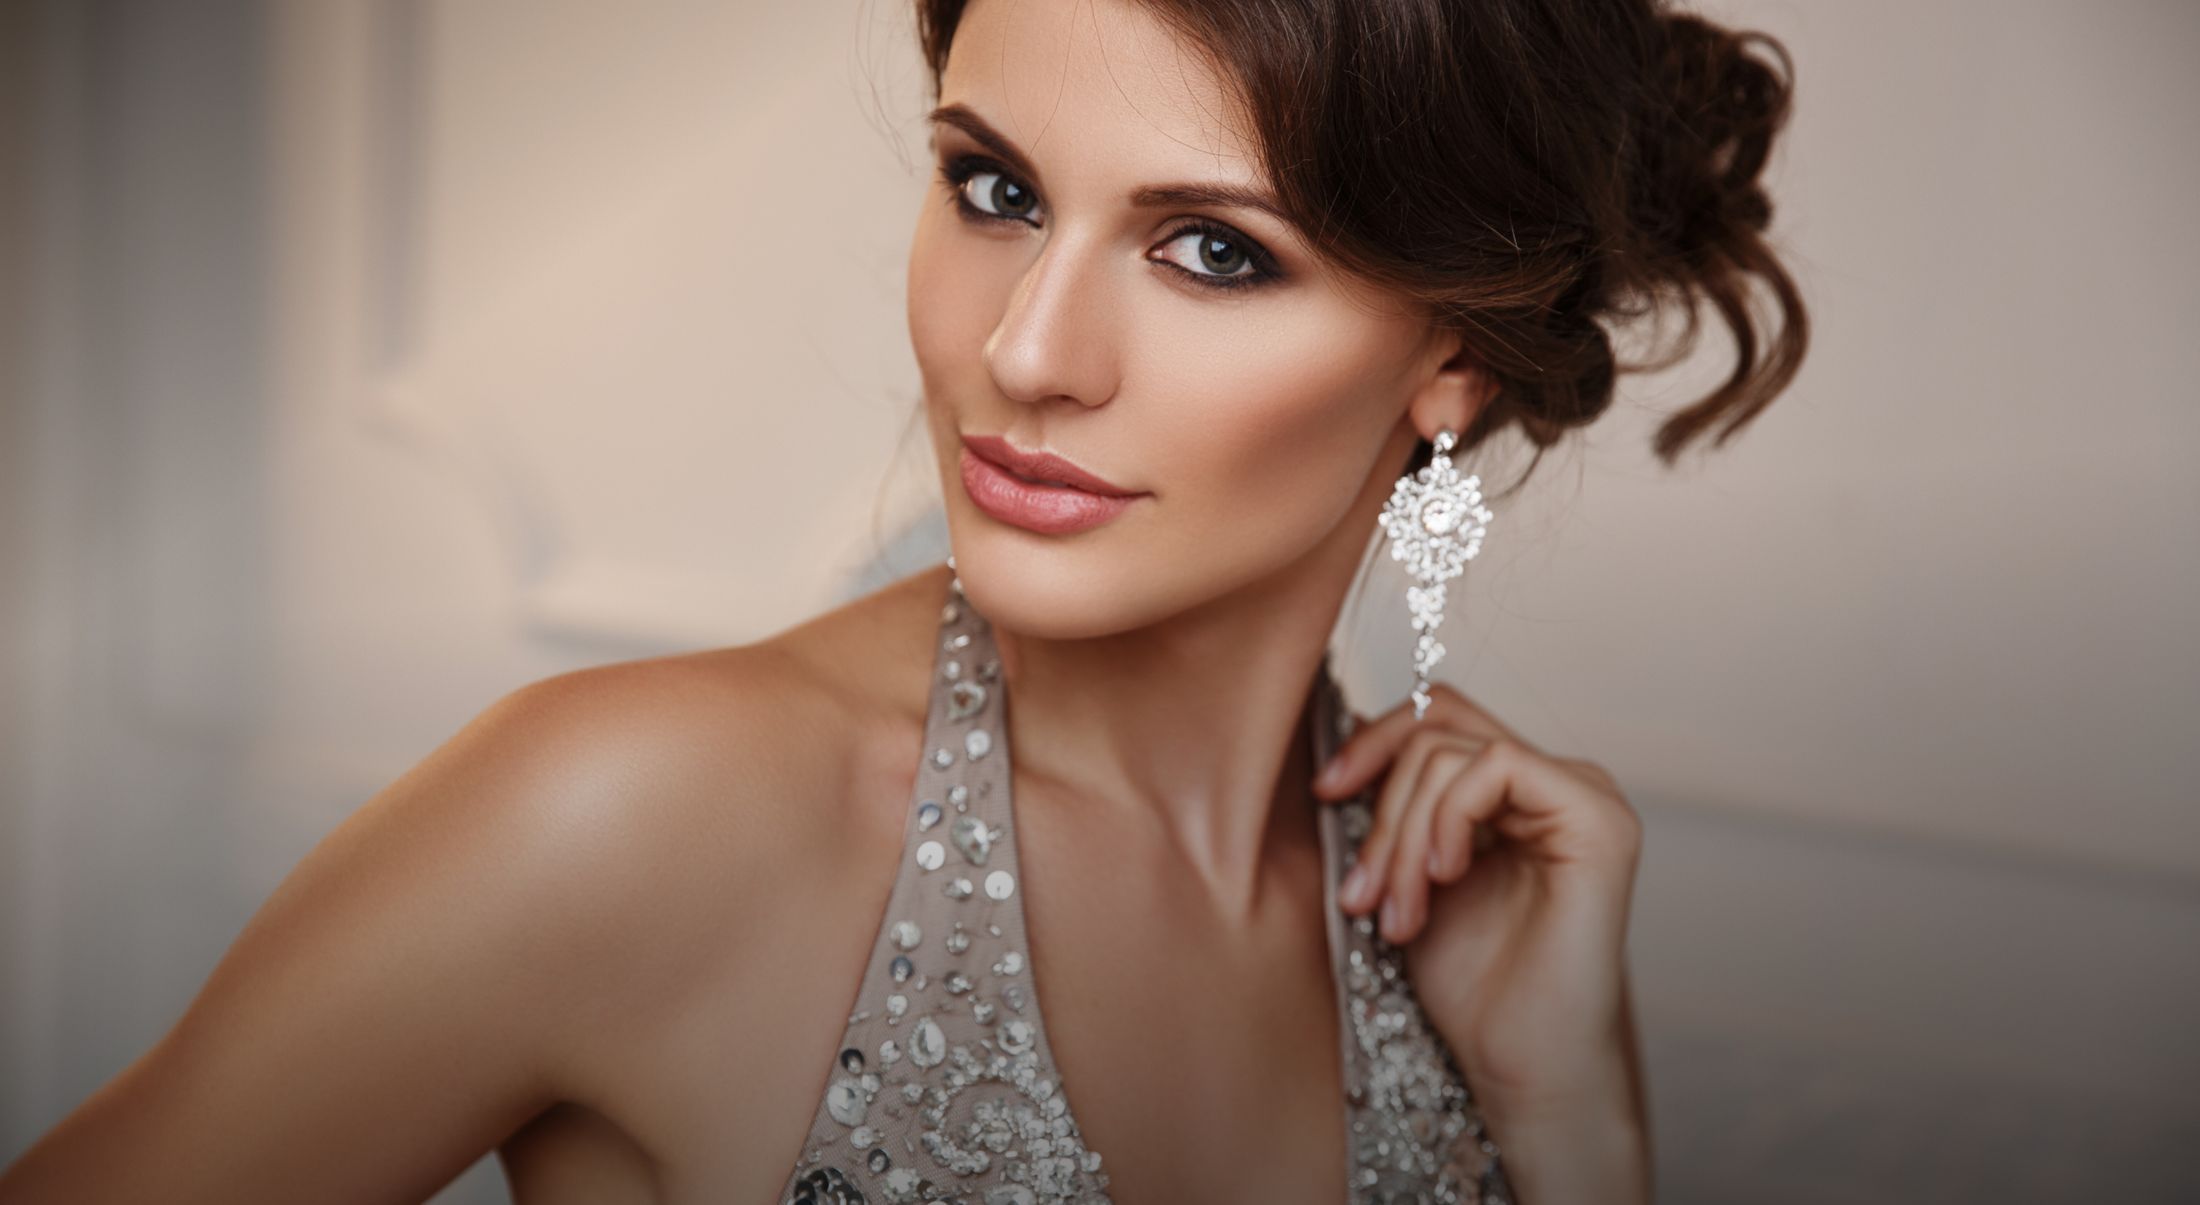 elegant woman wearing a silver dress and earrings